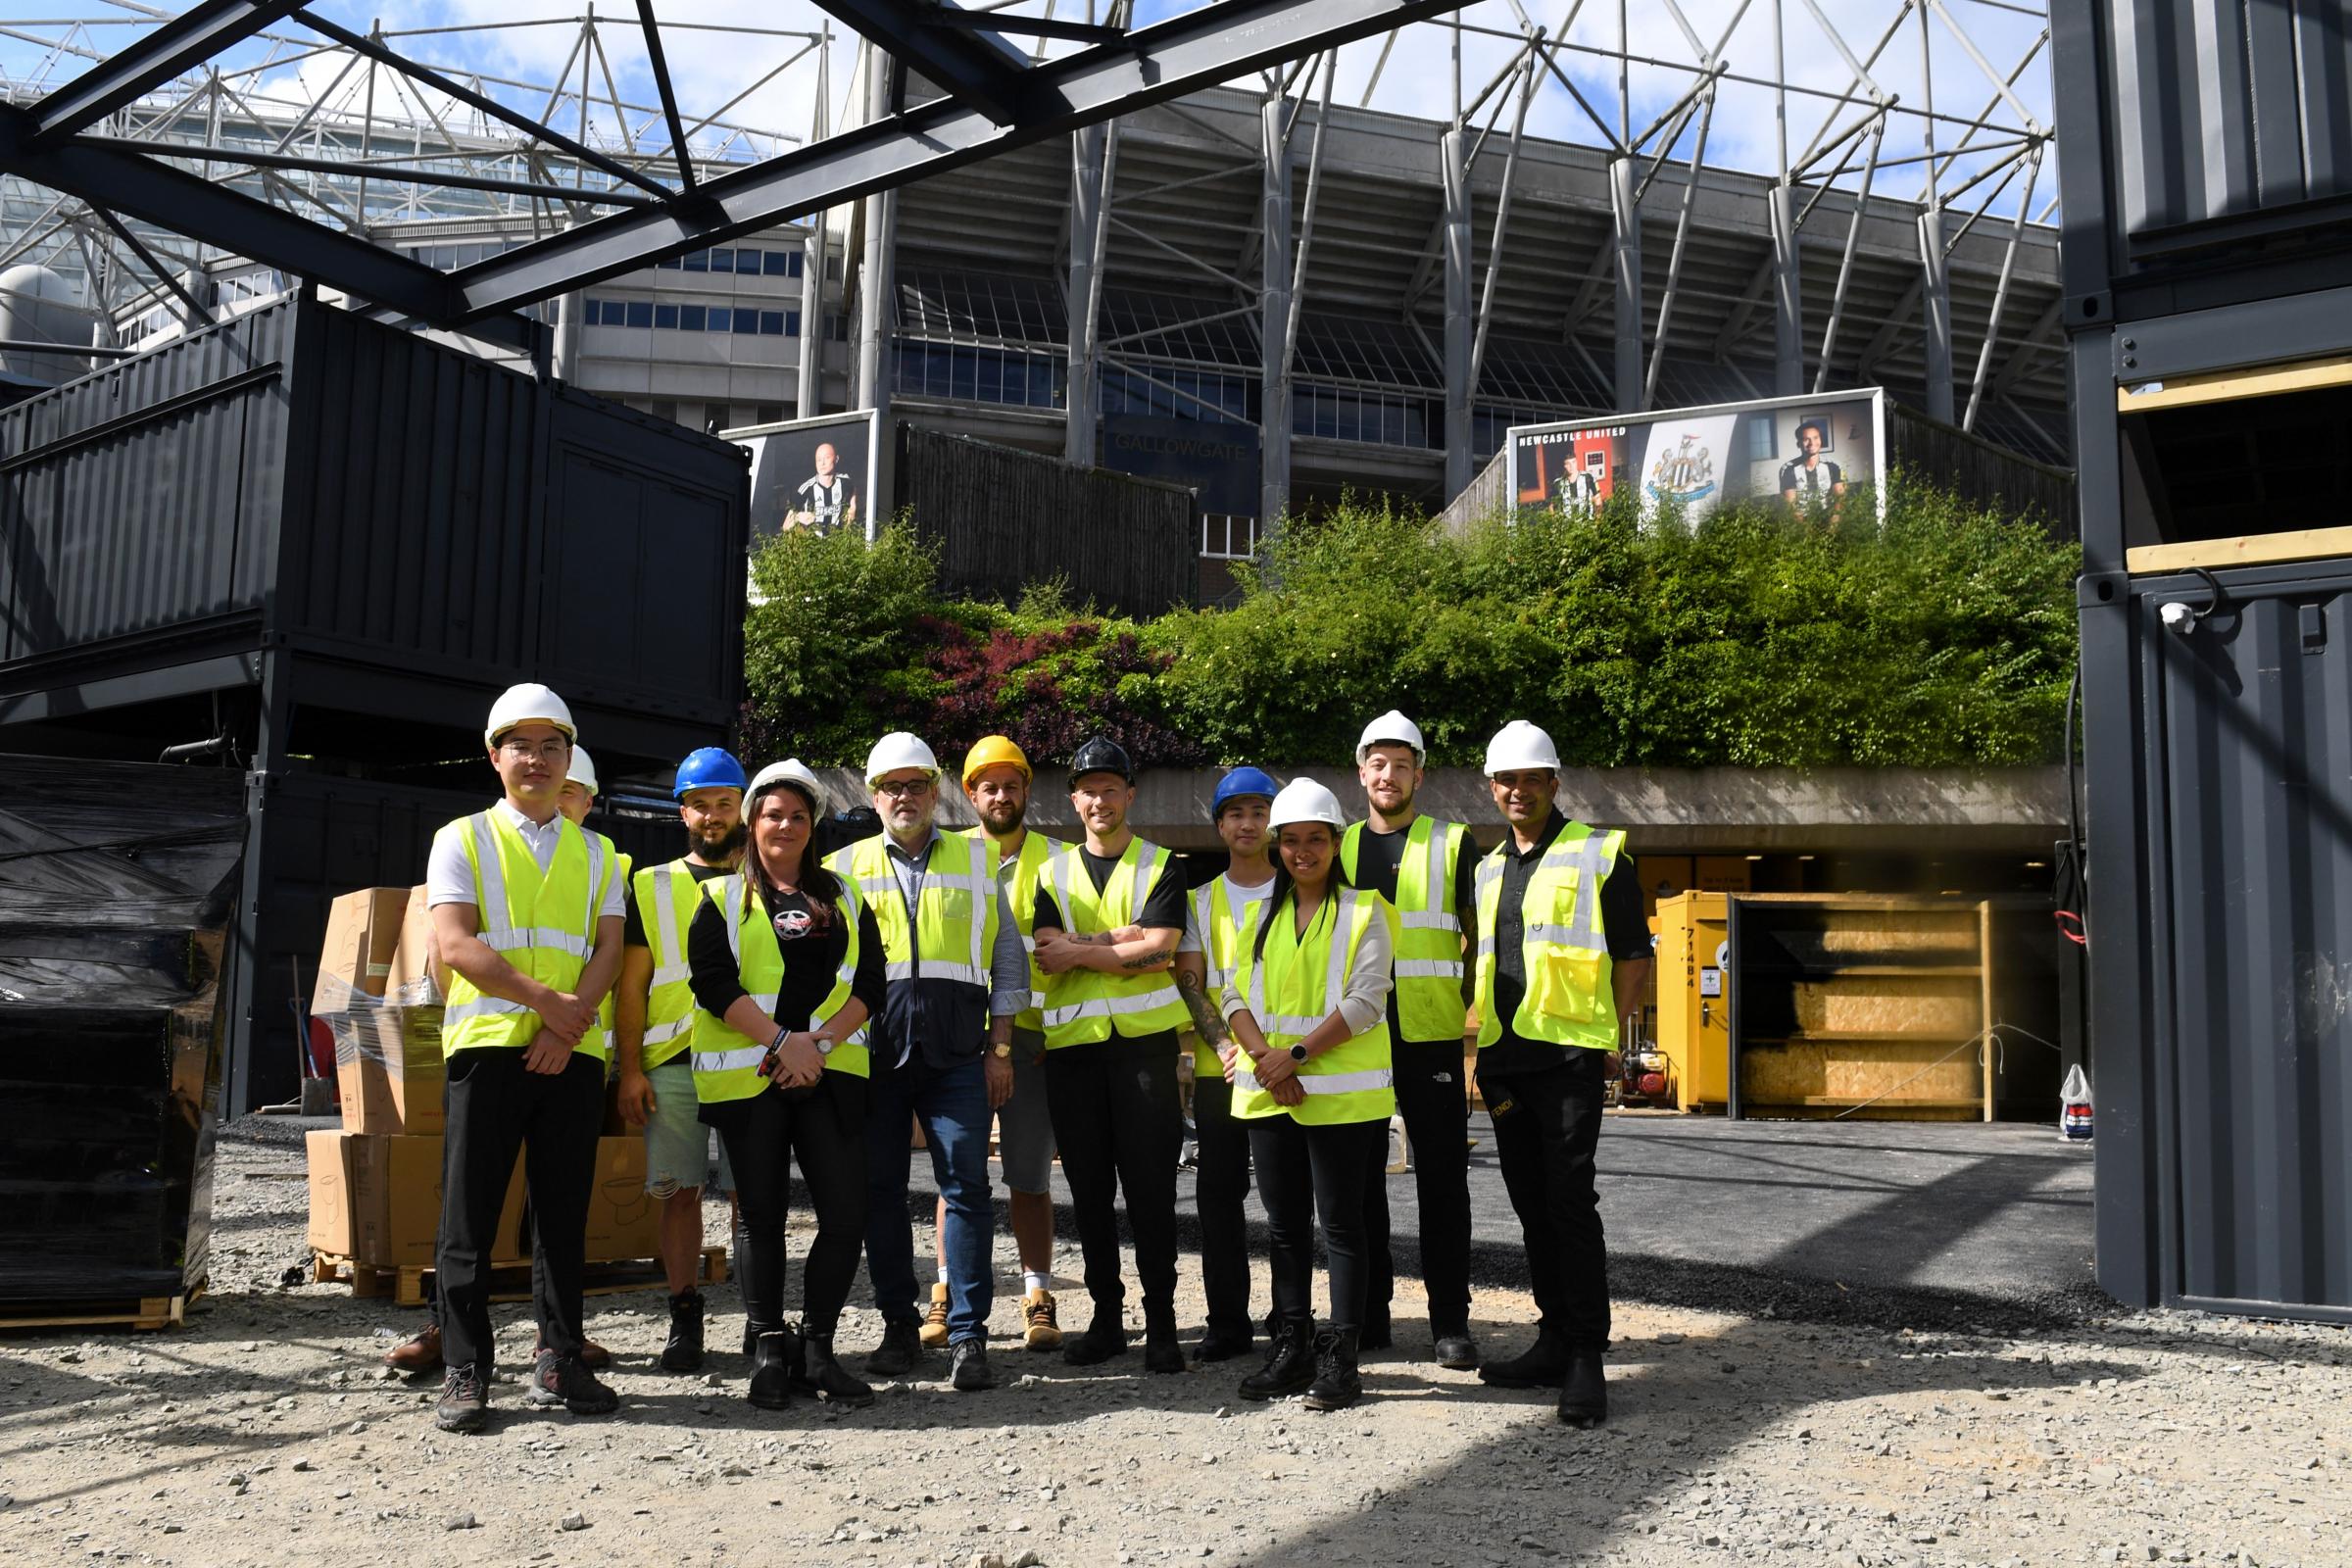 St. James' Park fanzone in Newcastle hosts recruitment drive